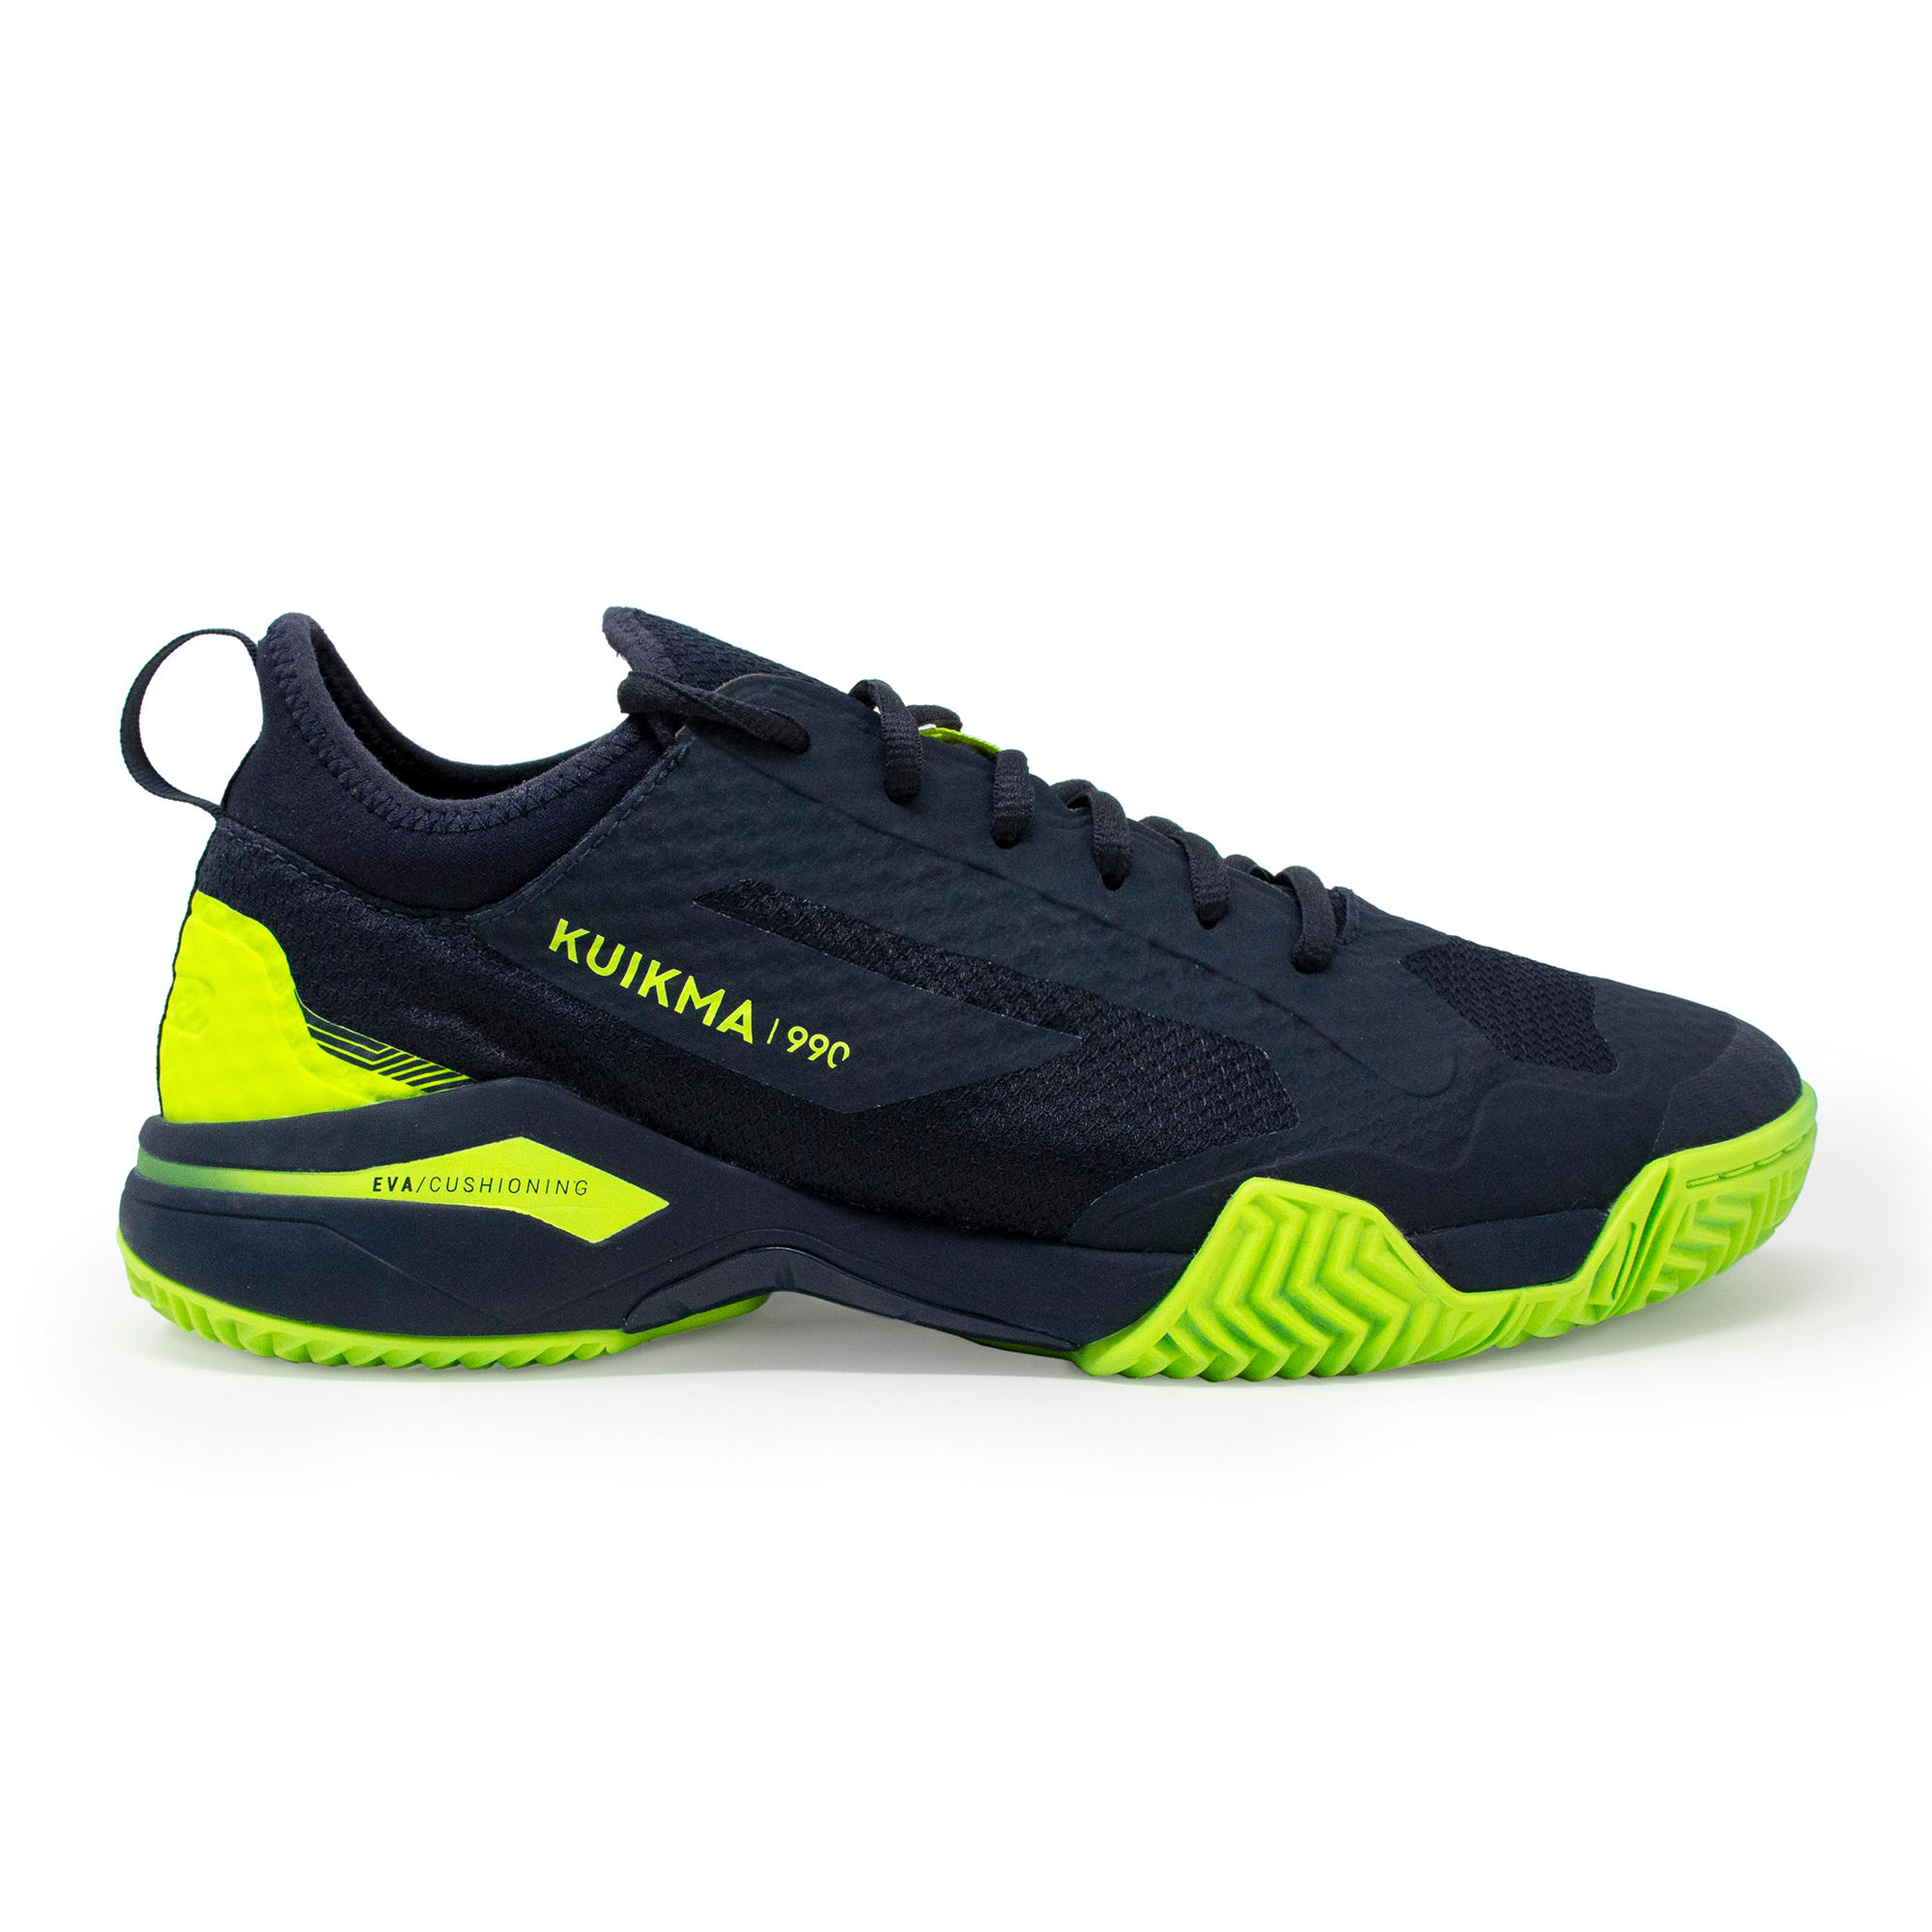 Men's Padel Shoes PS 990 Dynamic - Blue/Yellow 12/16